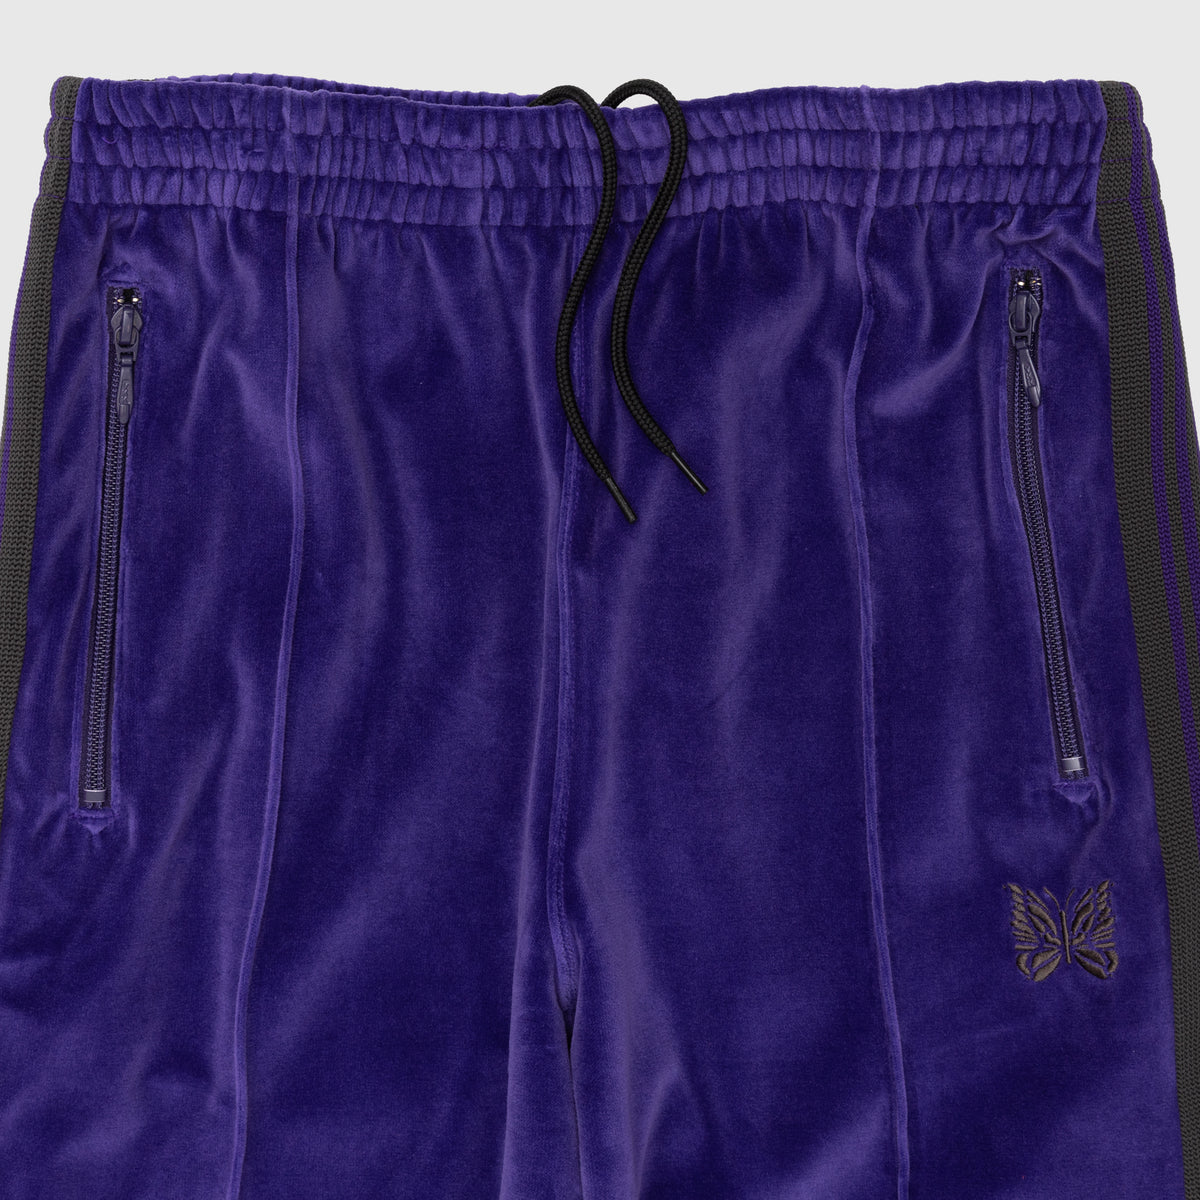 Purple Narrow Track Pants by NEEDLES on Sale